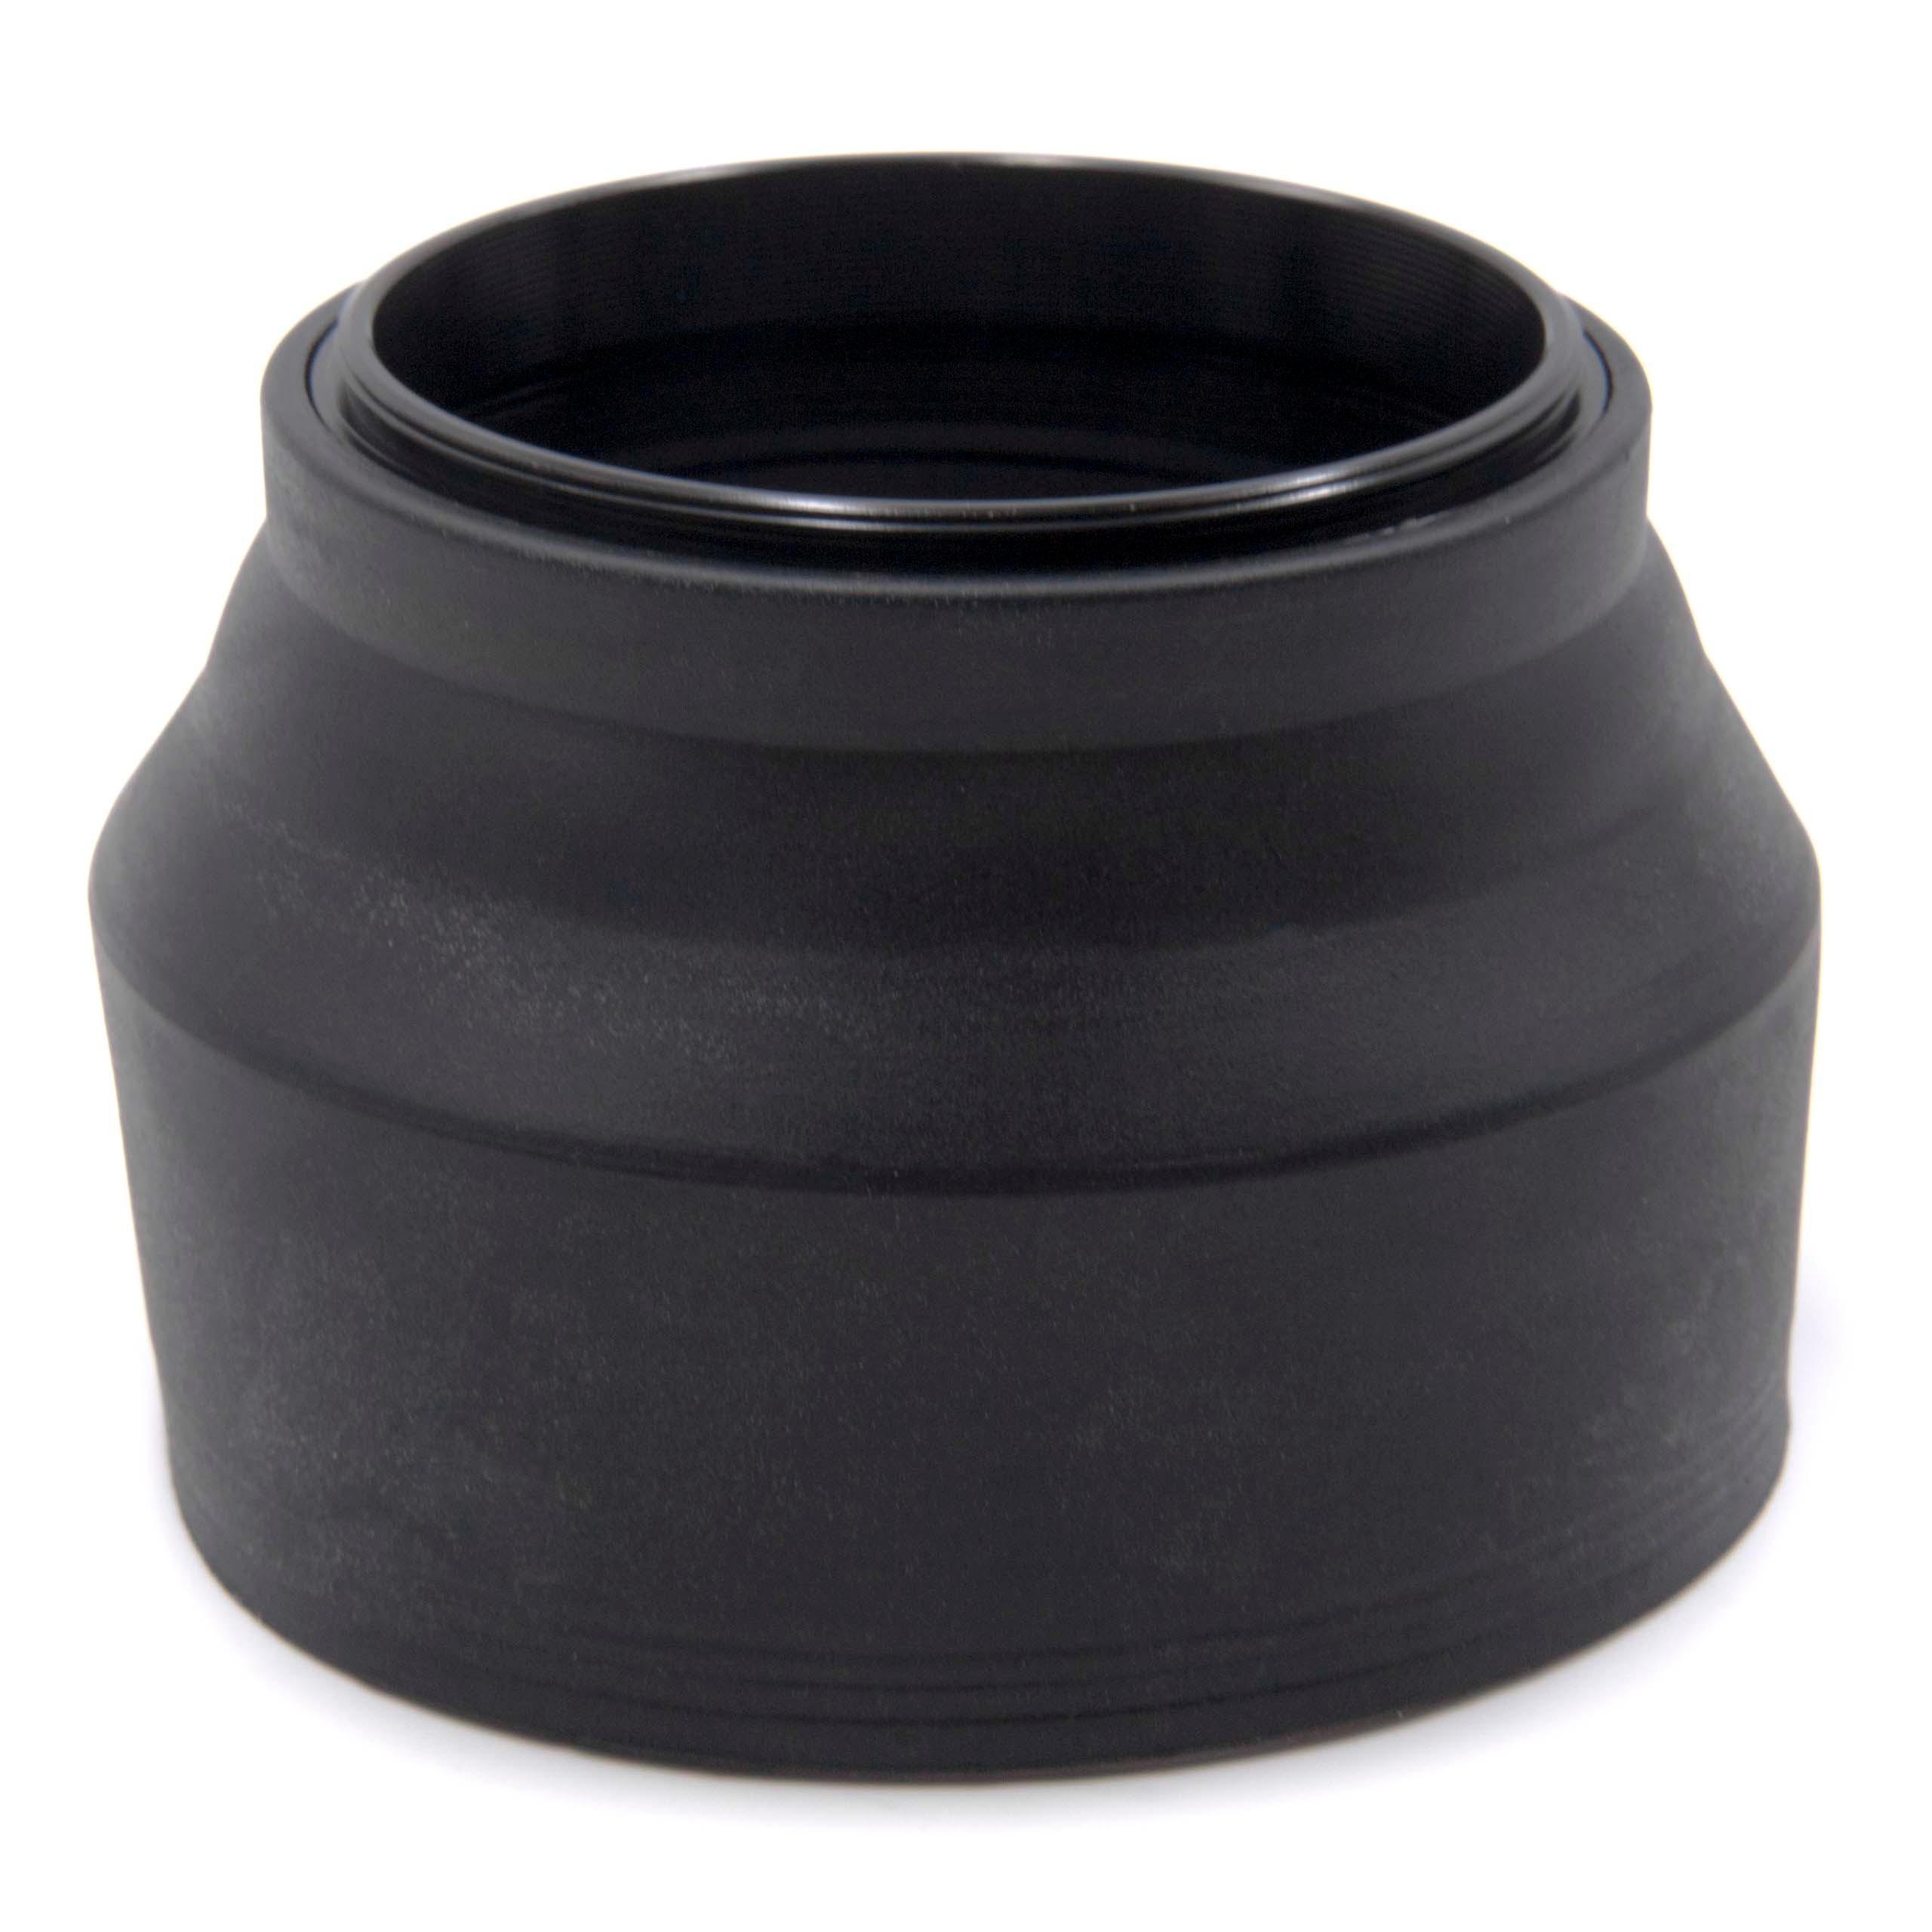 Lens Hood suitable for Fujifilm, JVC, Leica, Pentax, Panasonic, Kodak, Nikon, Minolta, Sigma, Tamron, Casio, S